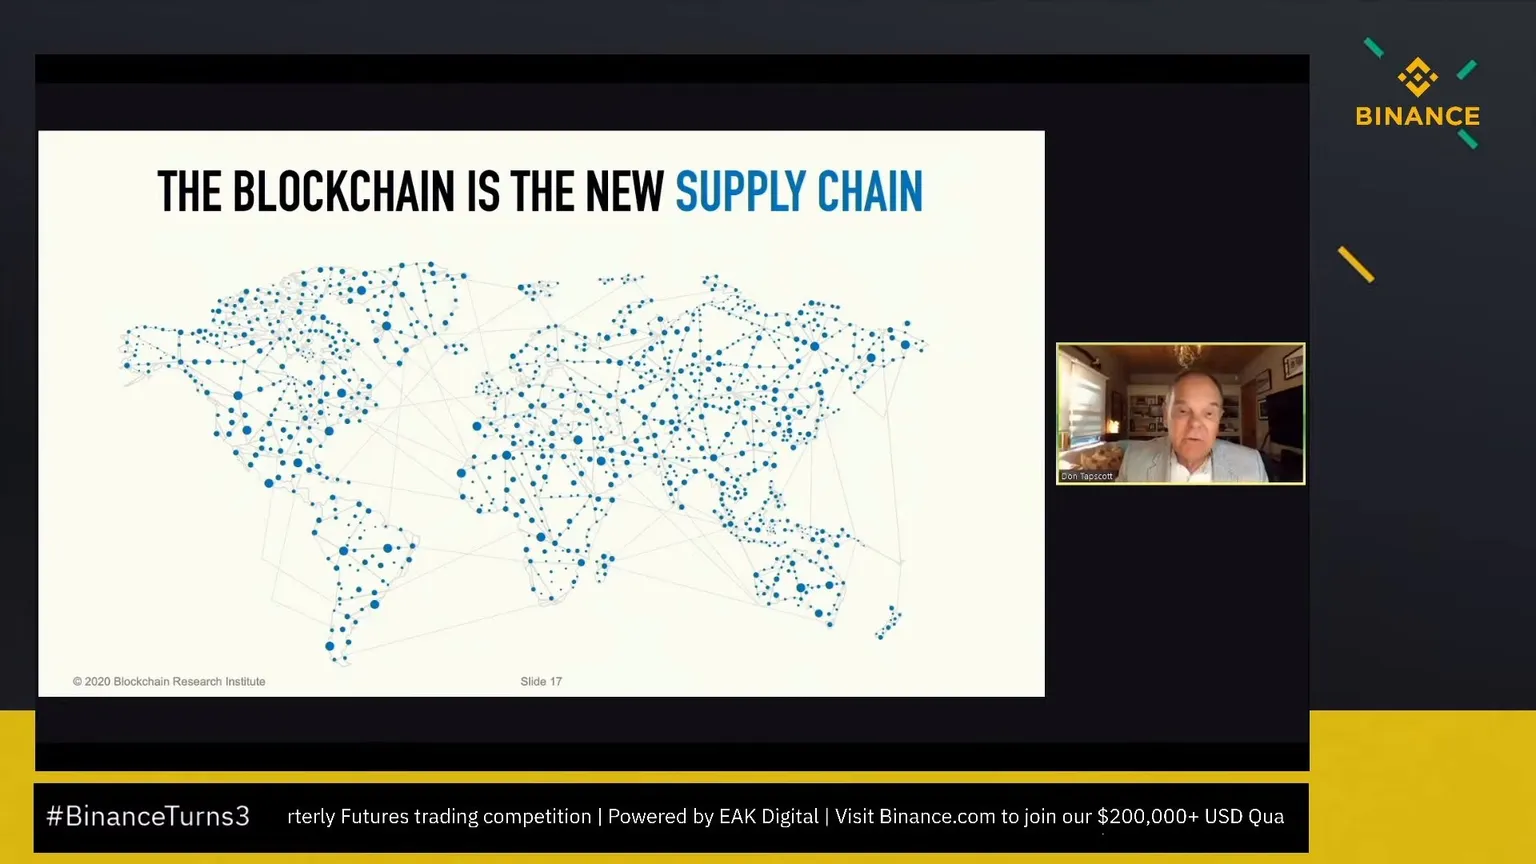 Blockchain is dominating several key industries, says Don Tapscott